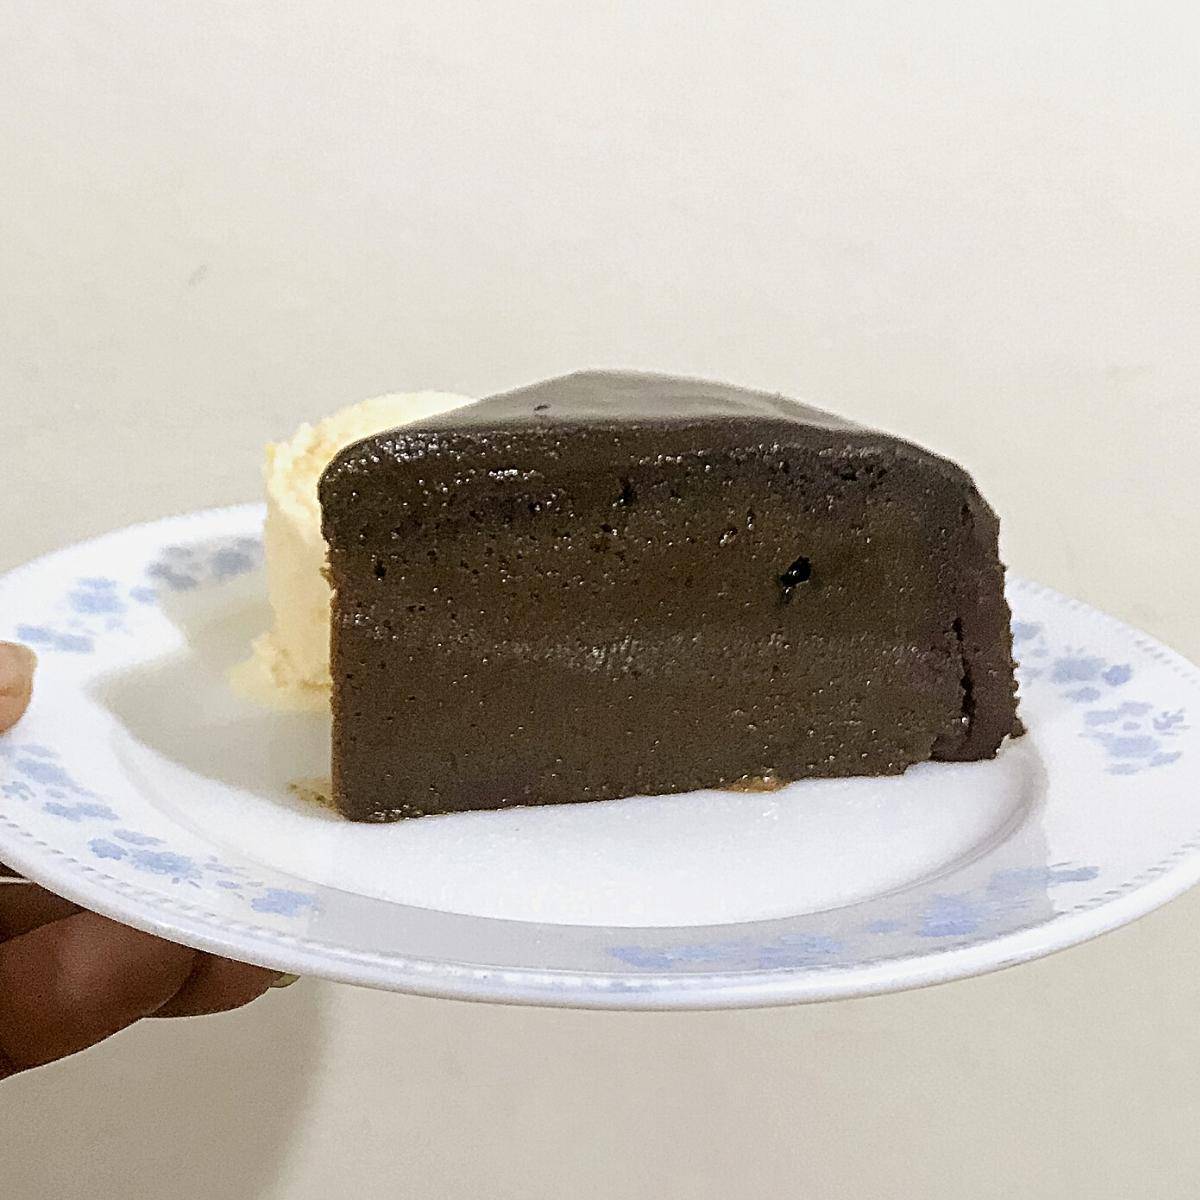 A slice of chocolate cake - flourless.